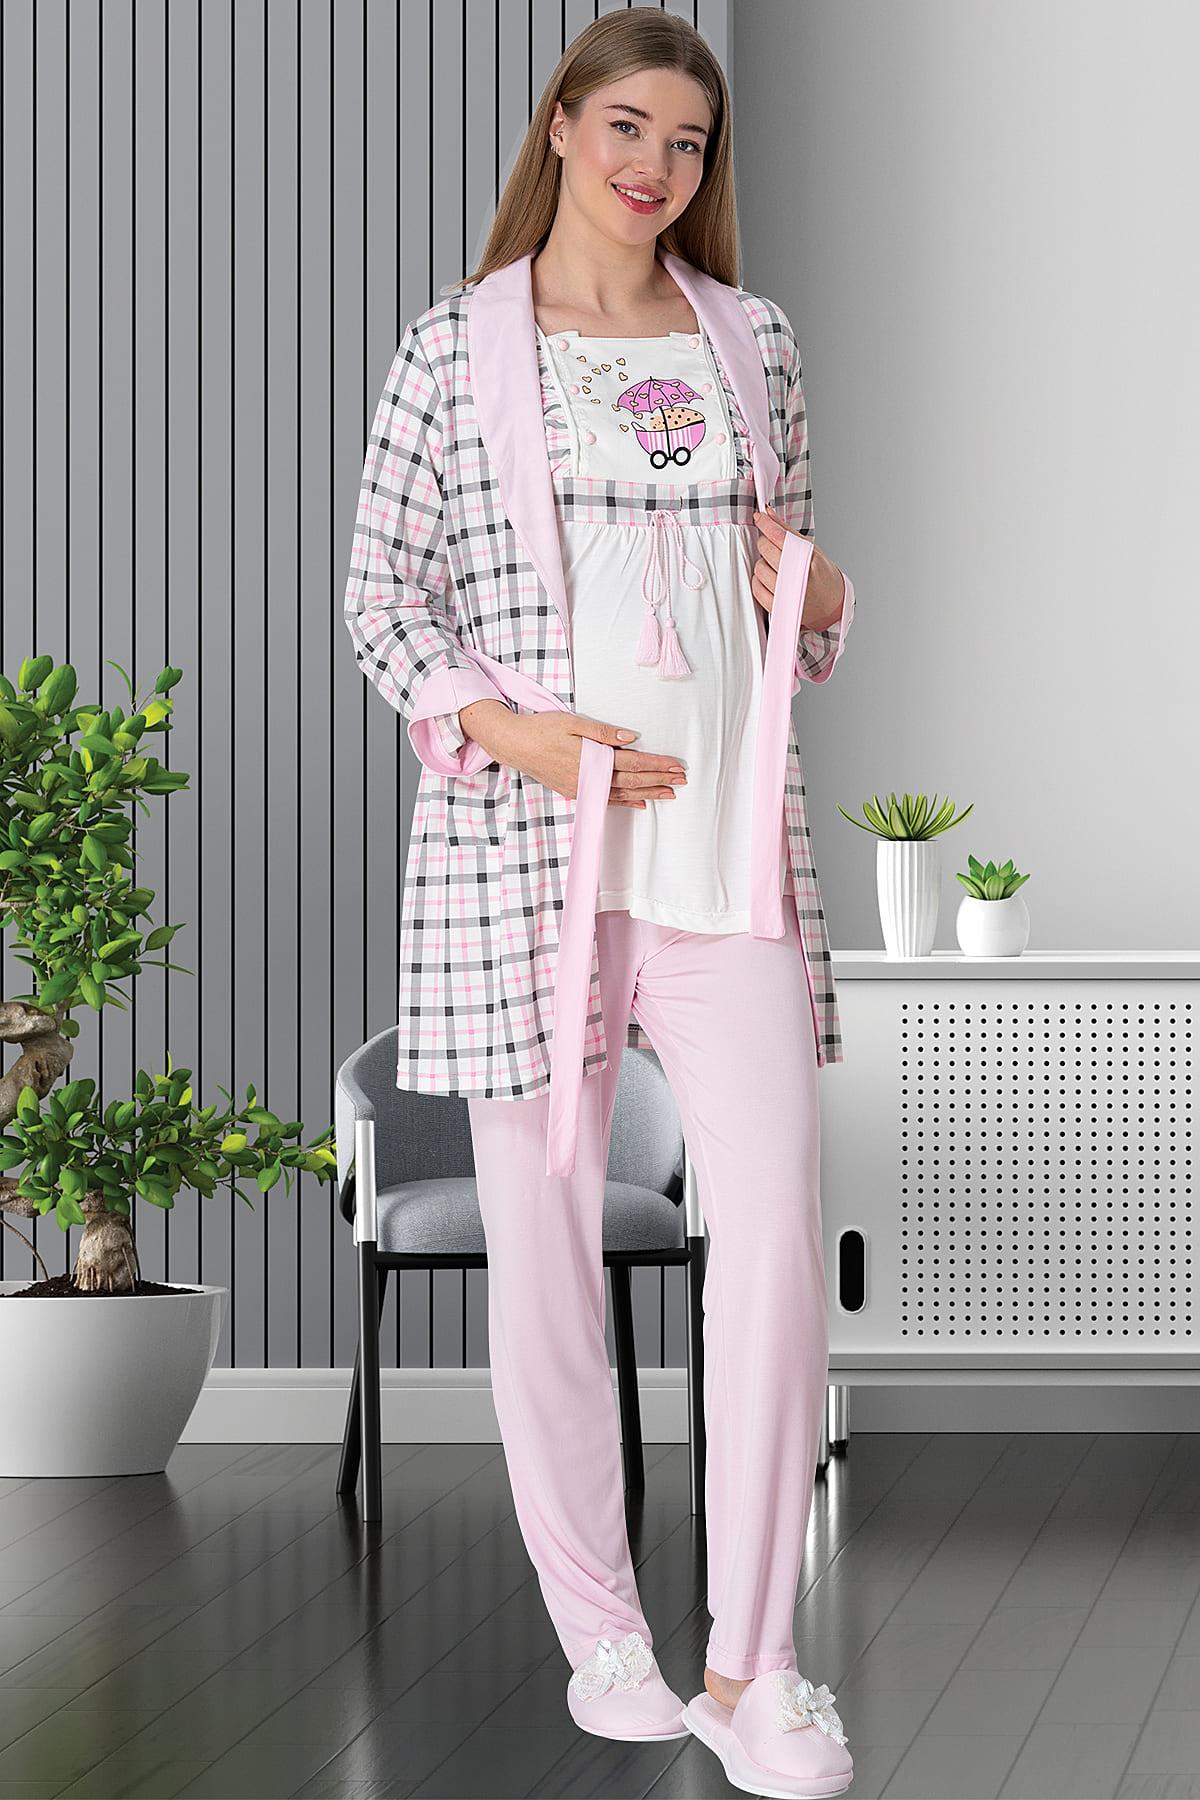 Shopymommy 5802 3-Pieces Maternity & Nursing Pajamas With Plaid Robe Pink